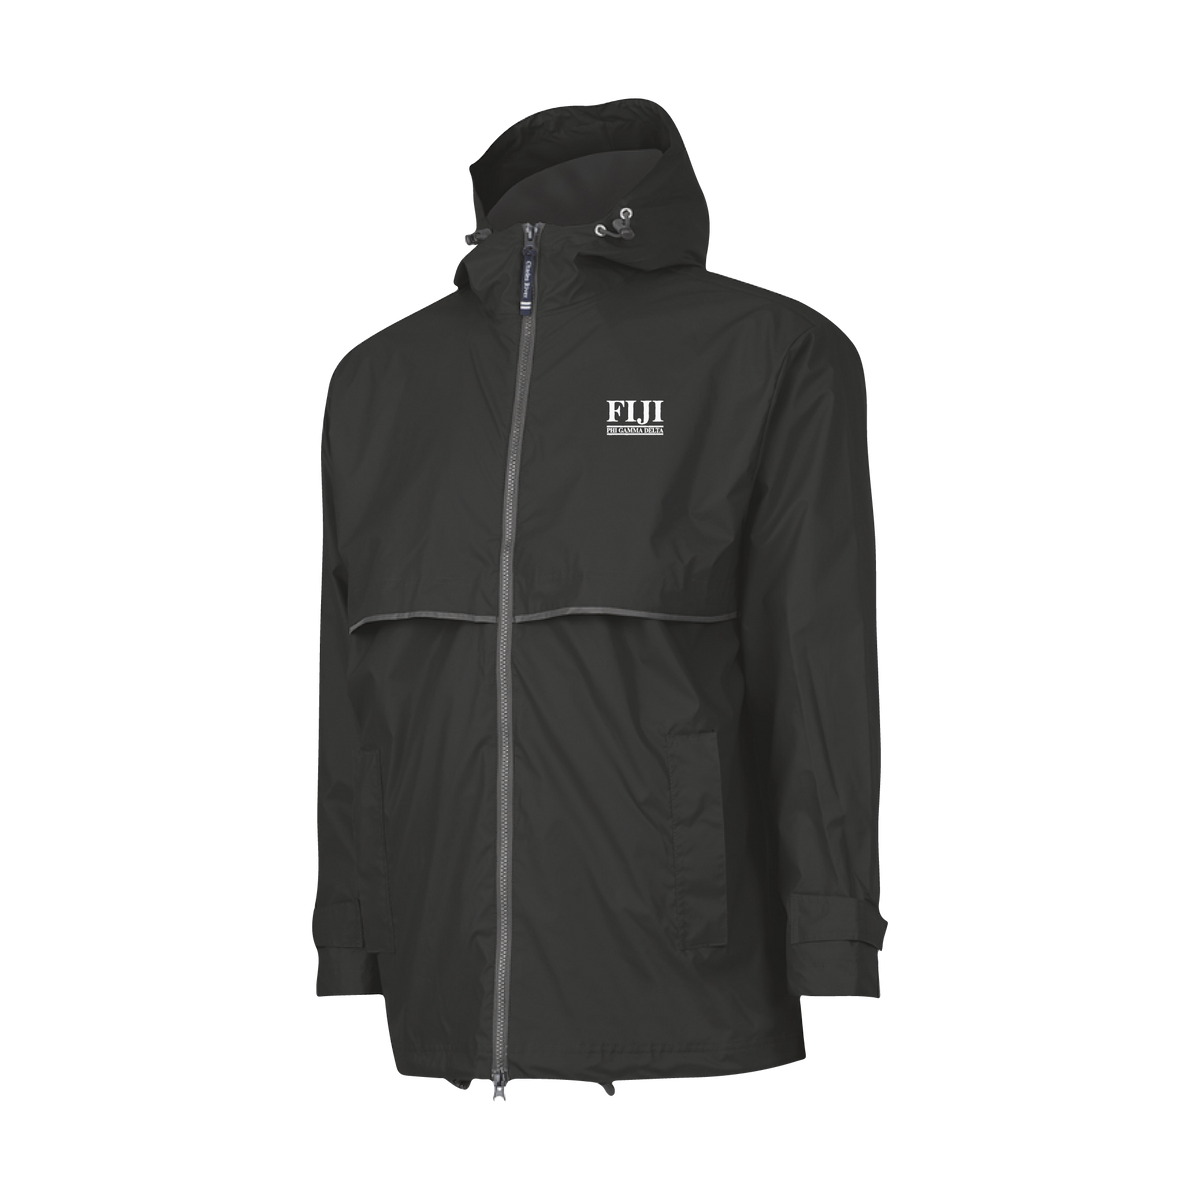 B-Unlimited Greek - Rain Jacket (FIJI) - Charles River - 9199 - New Englander Rain Jacket - Black